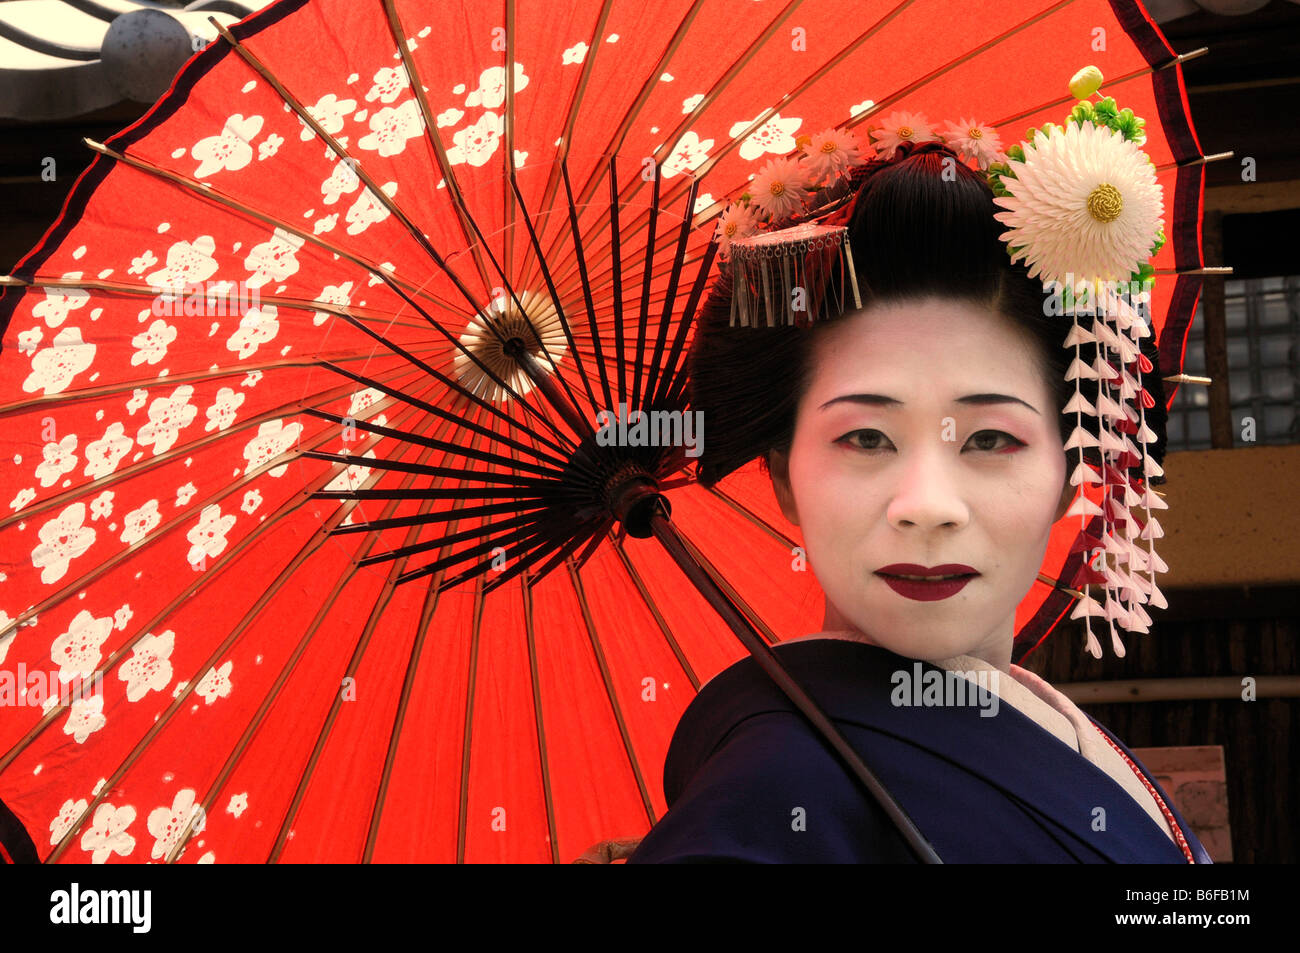 A Maiko, a trainee Geisha, carrying a red sun parasol or umbrella, Kyoto, Japan, Asia Stock Photo